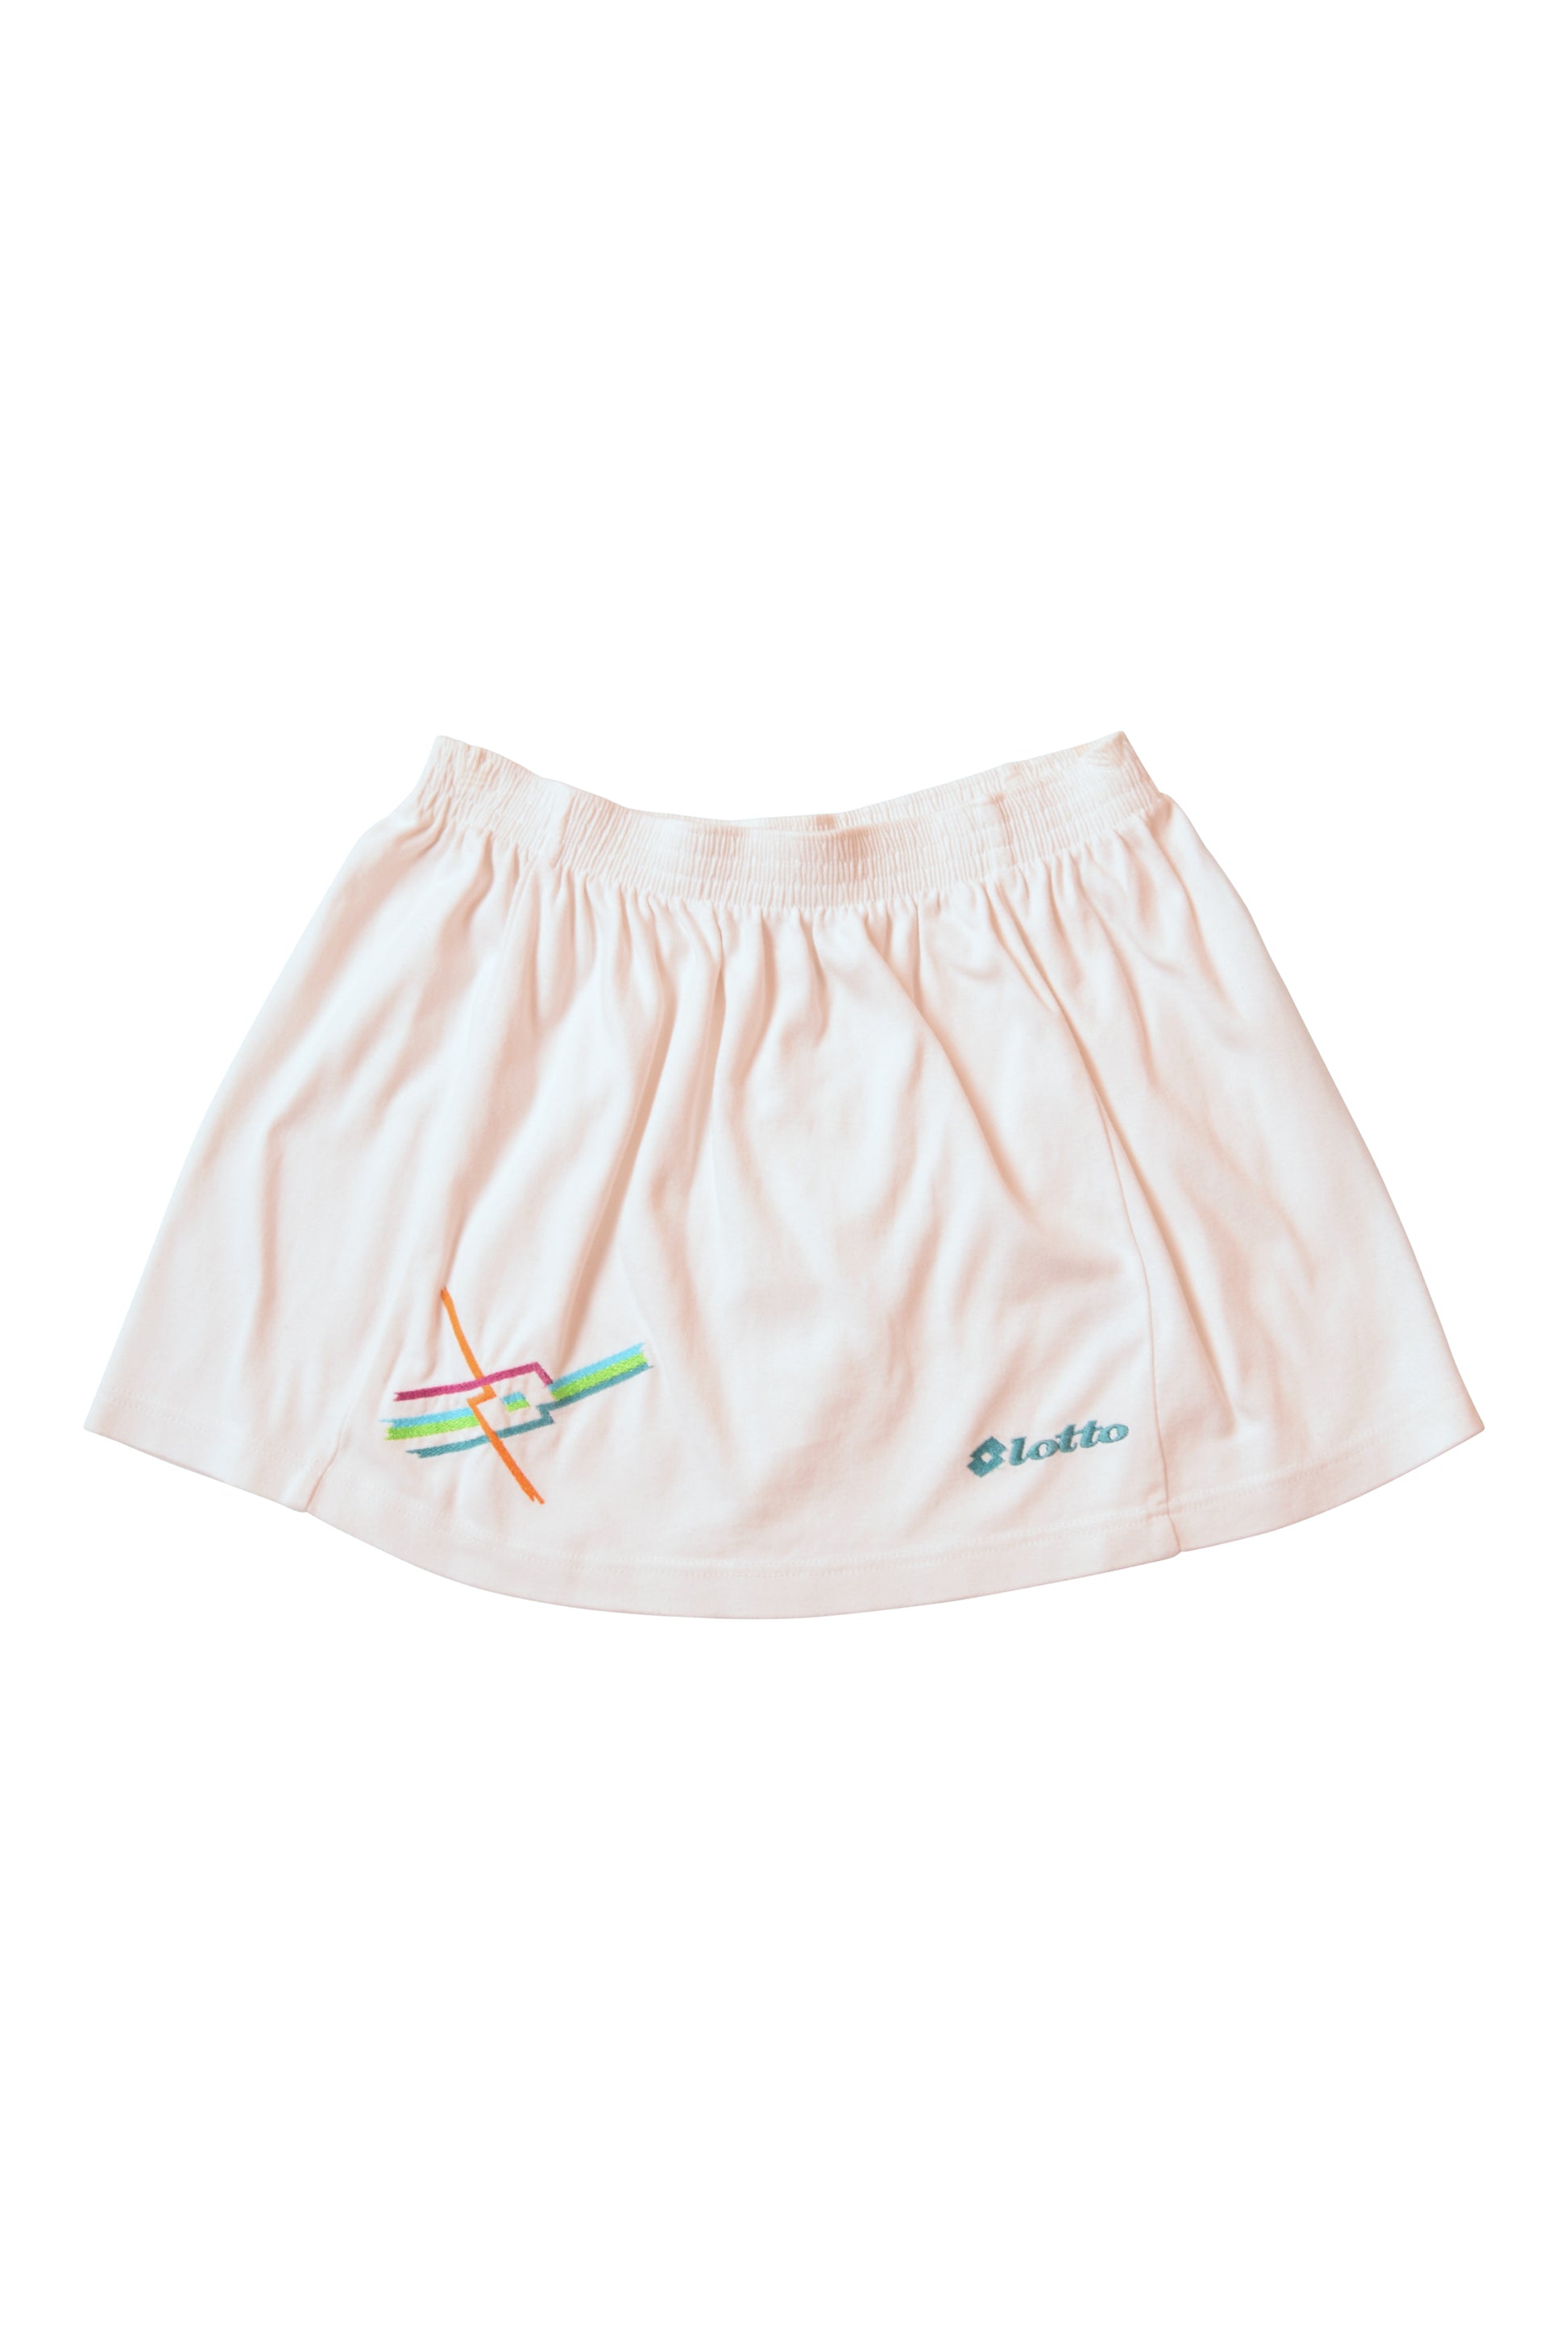 Vintage Lotto Tennis / Festival Skirt 90's